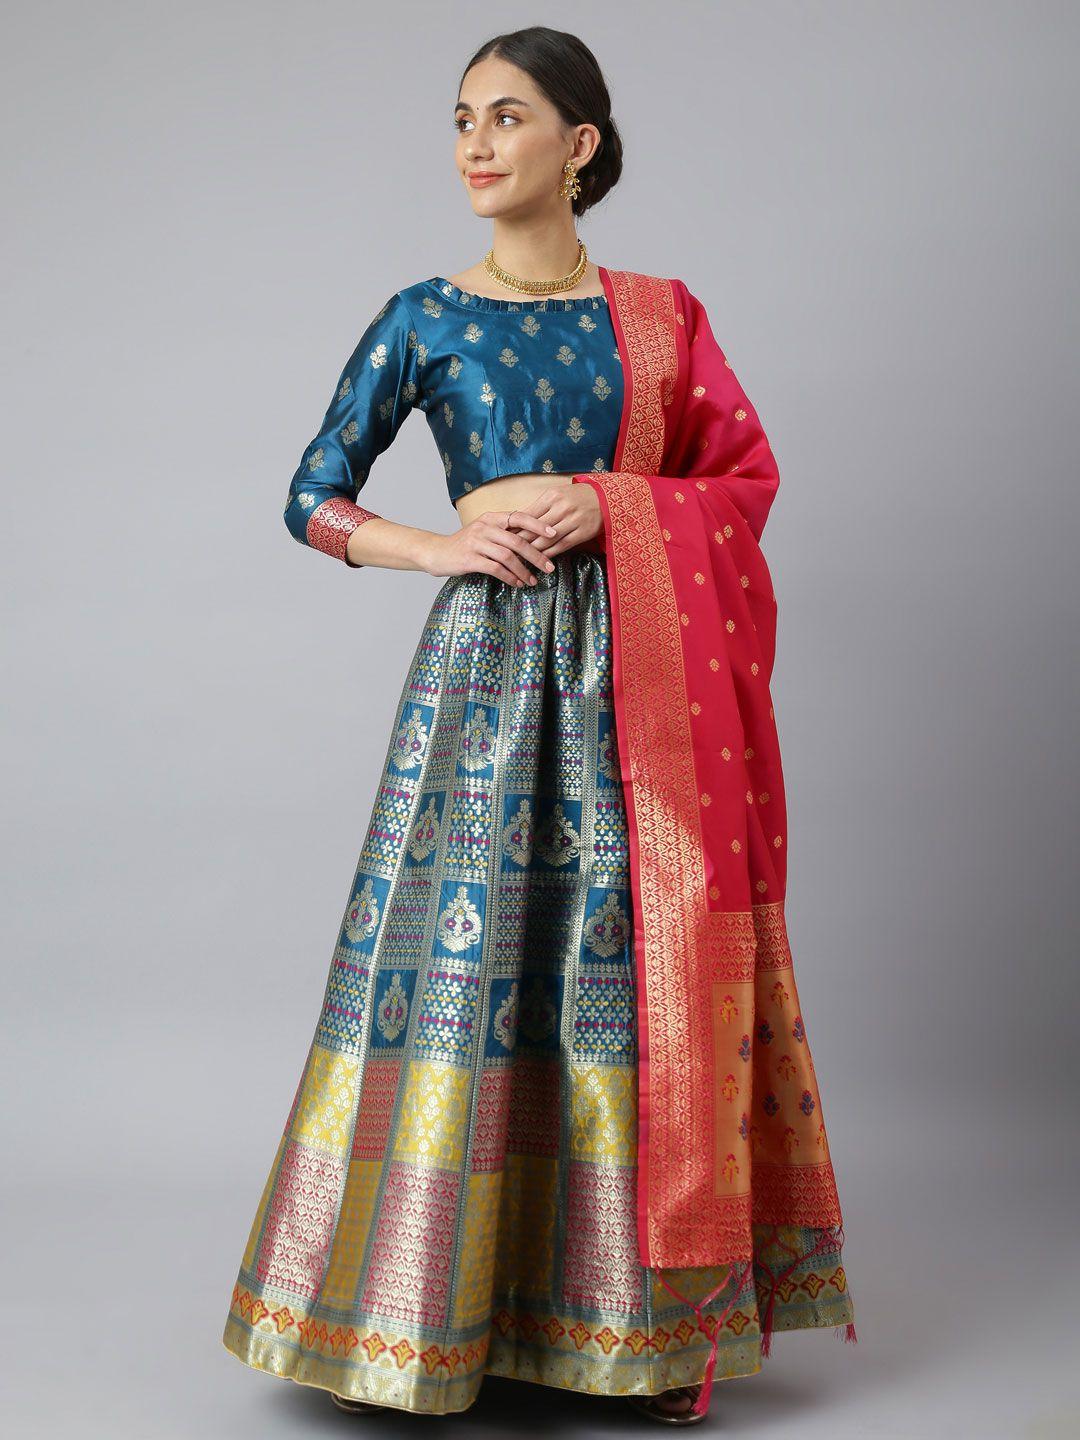 lilots blue & red semi-stitched lehenga & unstitched blouse with dupatta